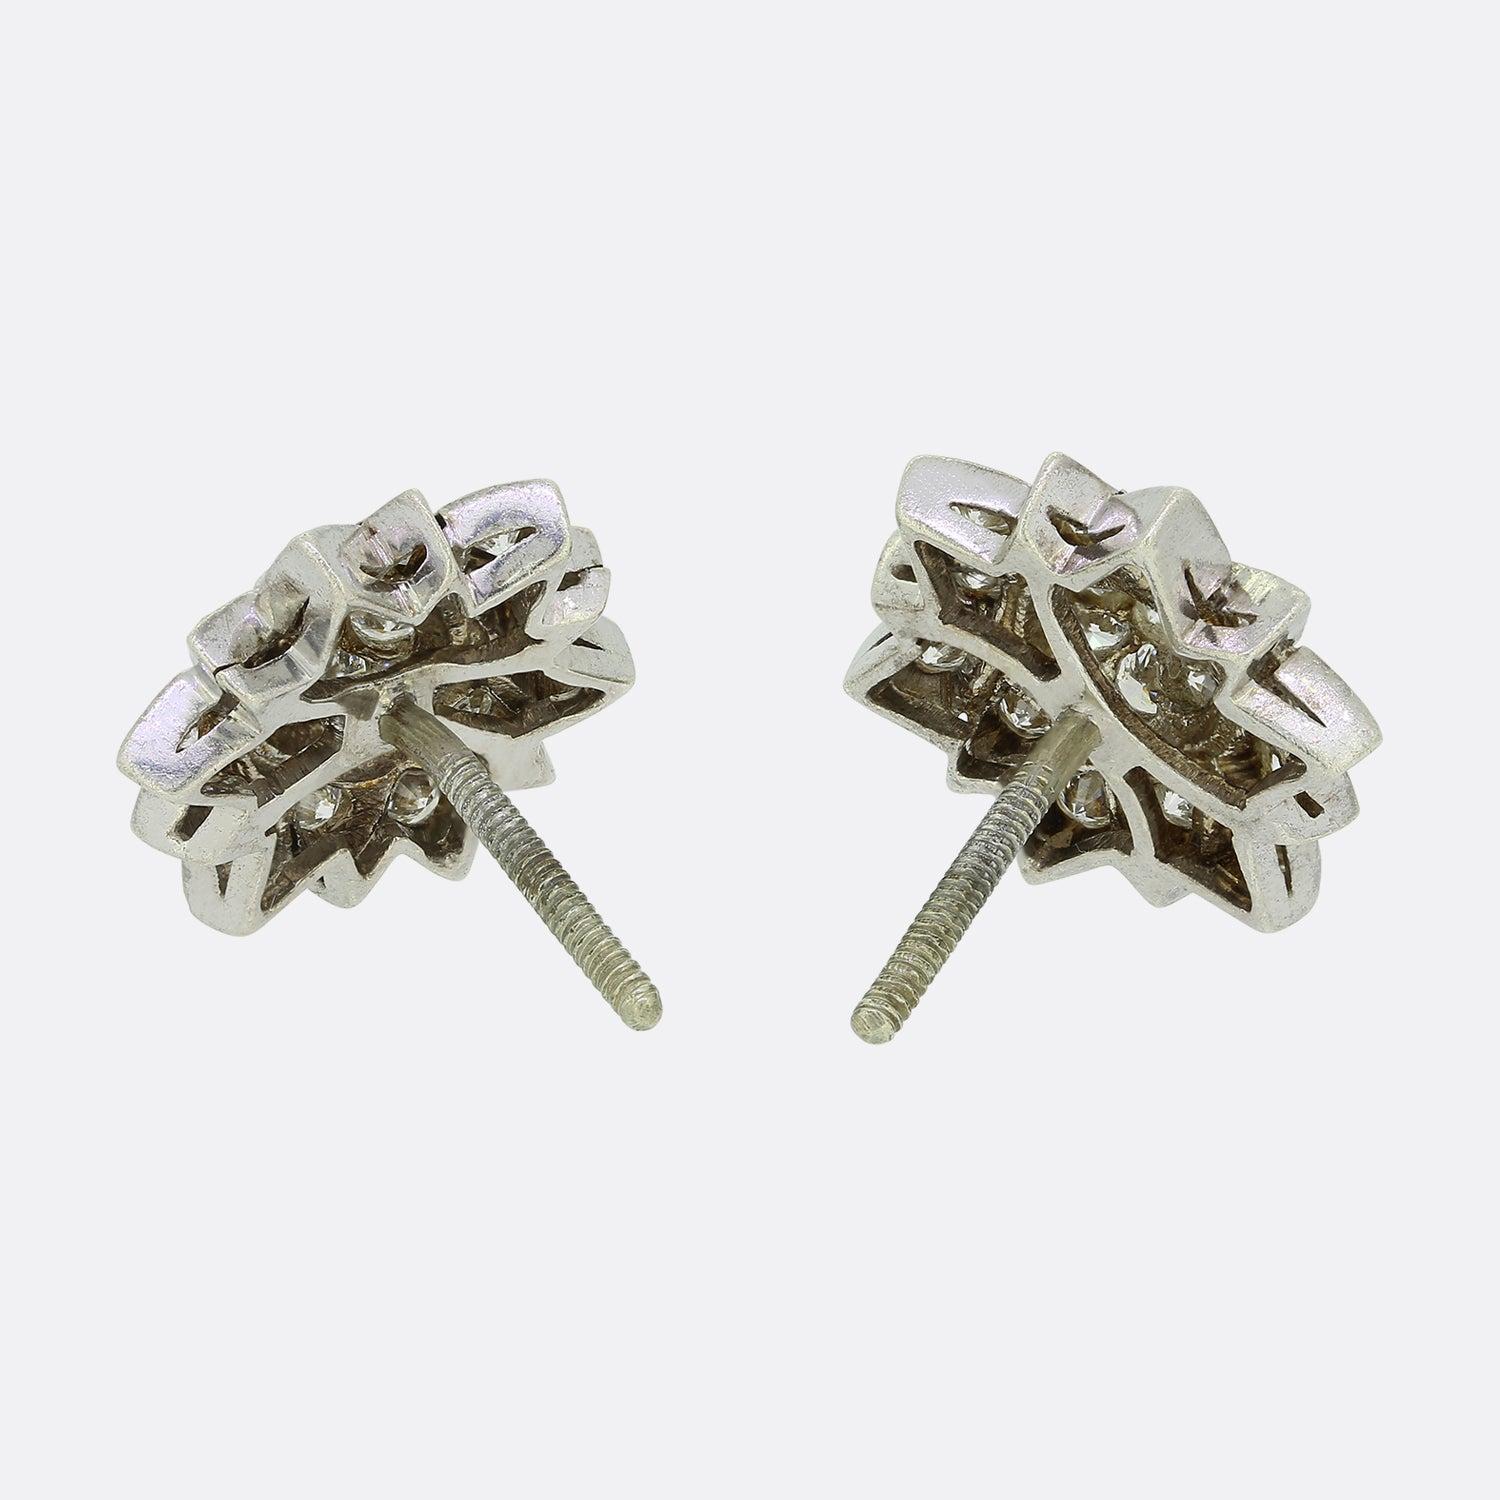 Brilliant Cut Vintage 1.14 Carat Diamond Cluster Earrings For Sale